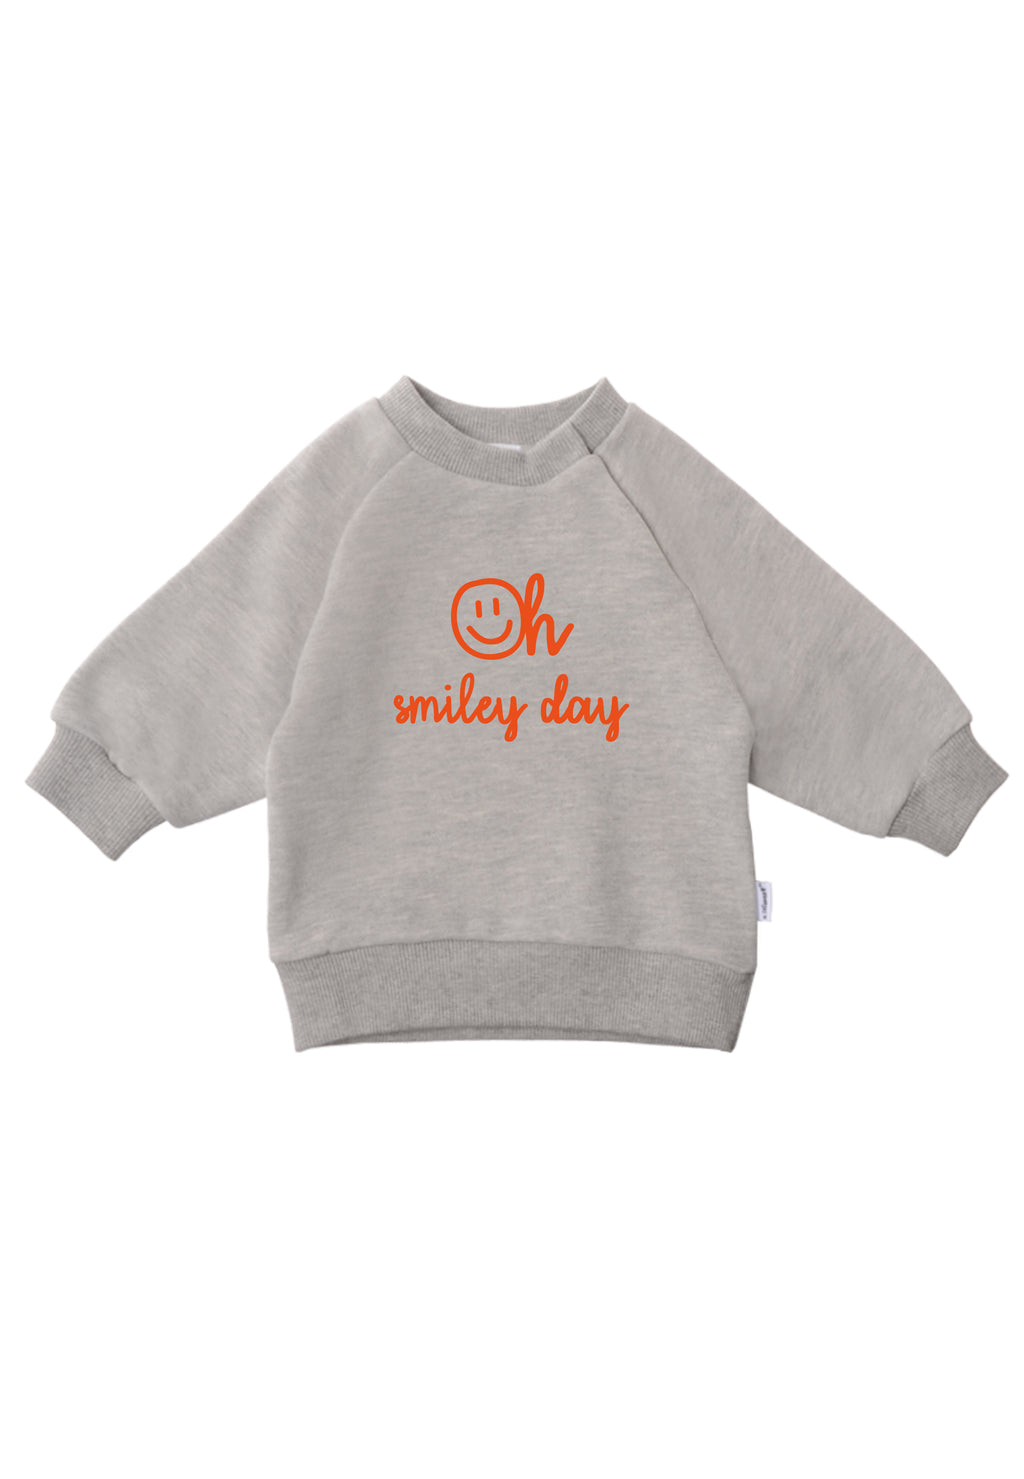 Sweatshirt in grau mit orangenem Print "oh smiley day"